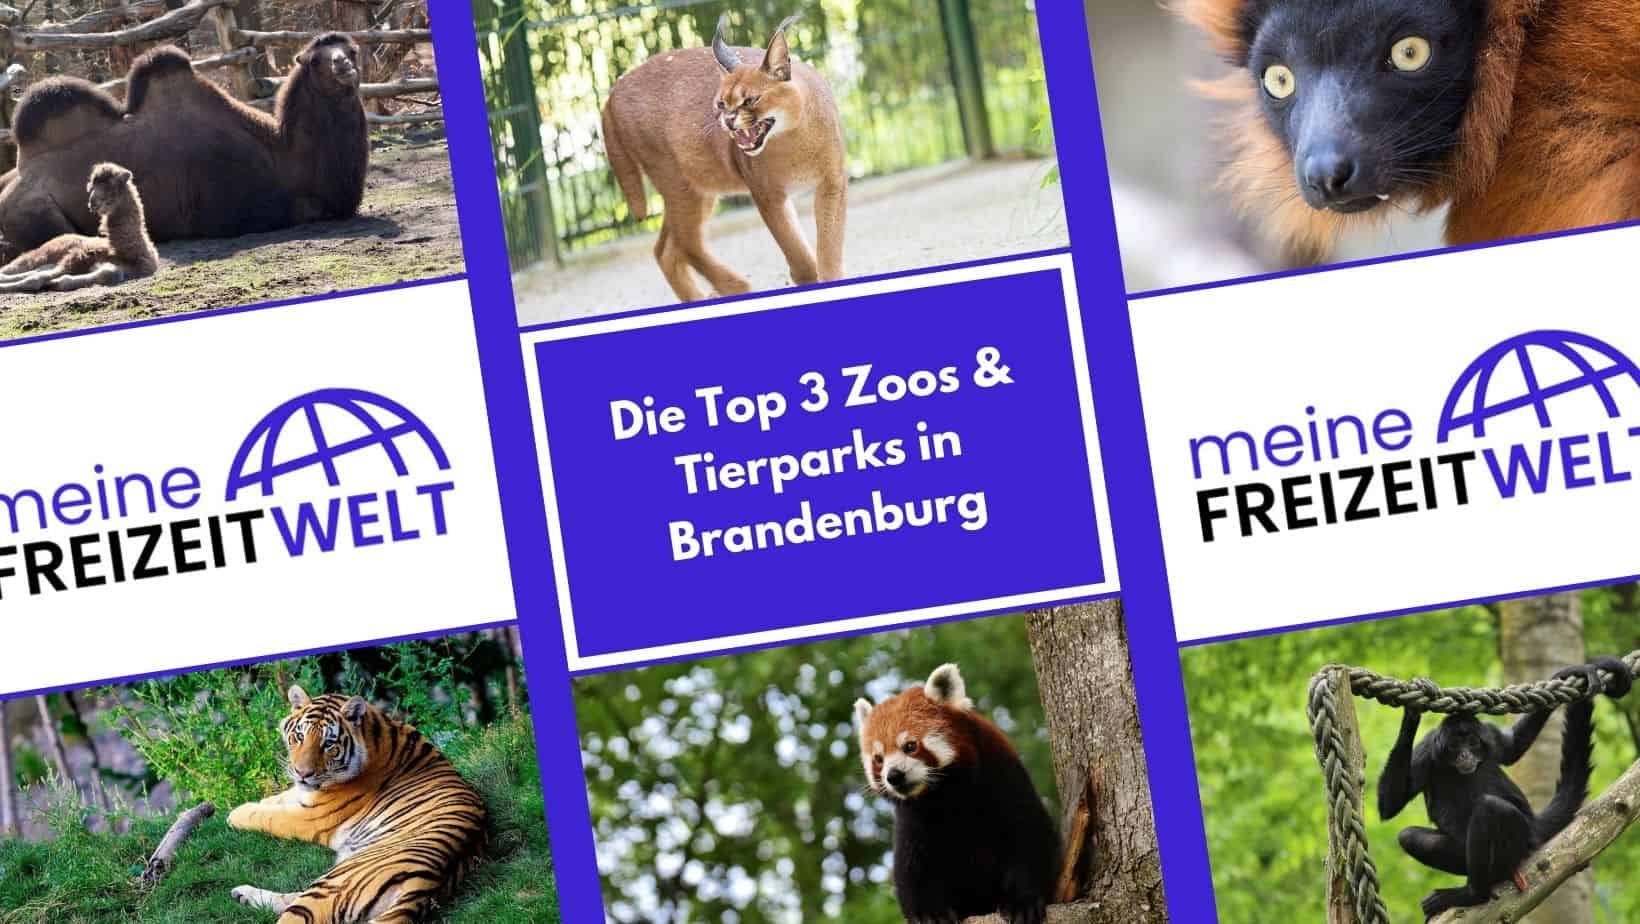 Die Top 3 Zoos & Tierparks in Brandenburg